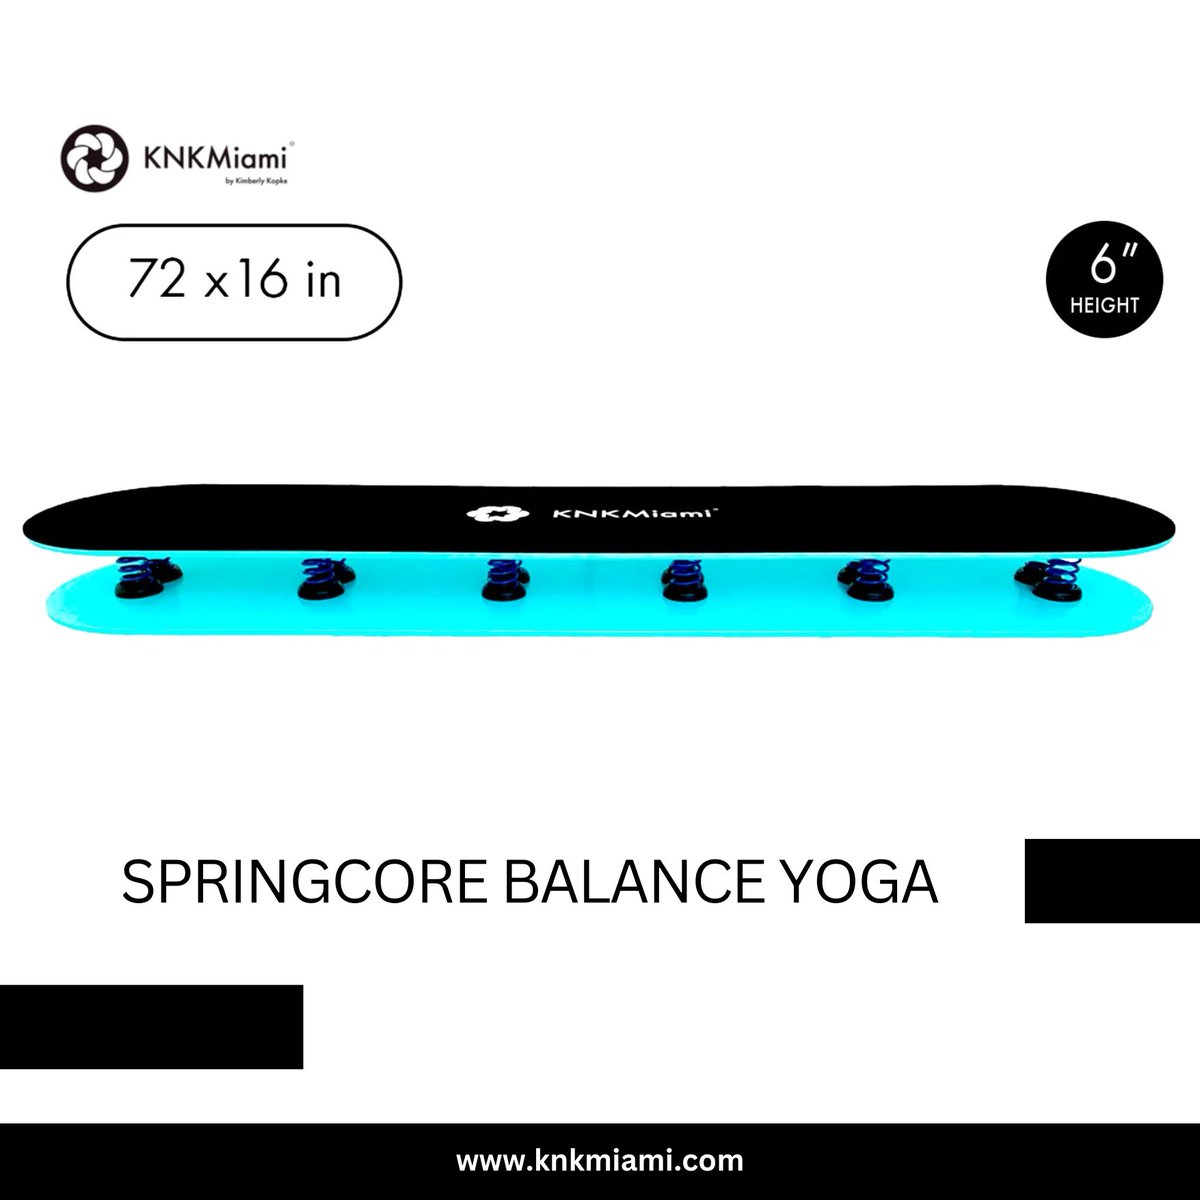 SpringCore Balance Yoga

#springcorebalanceyoga #knkmiami #yogagear #activewear #yogacollection #fitnessapparel #yogalifestyle #springcorecollection #athleisure #shopknkmiami

💥Visit Us: knkmiami.com/collections/al…